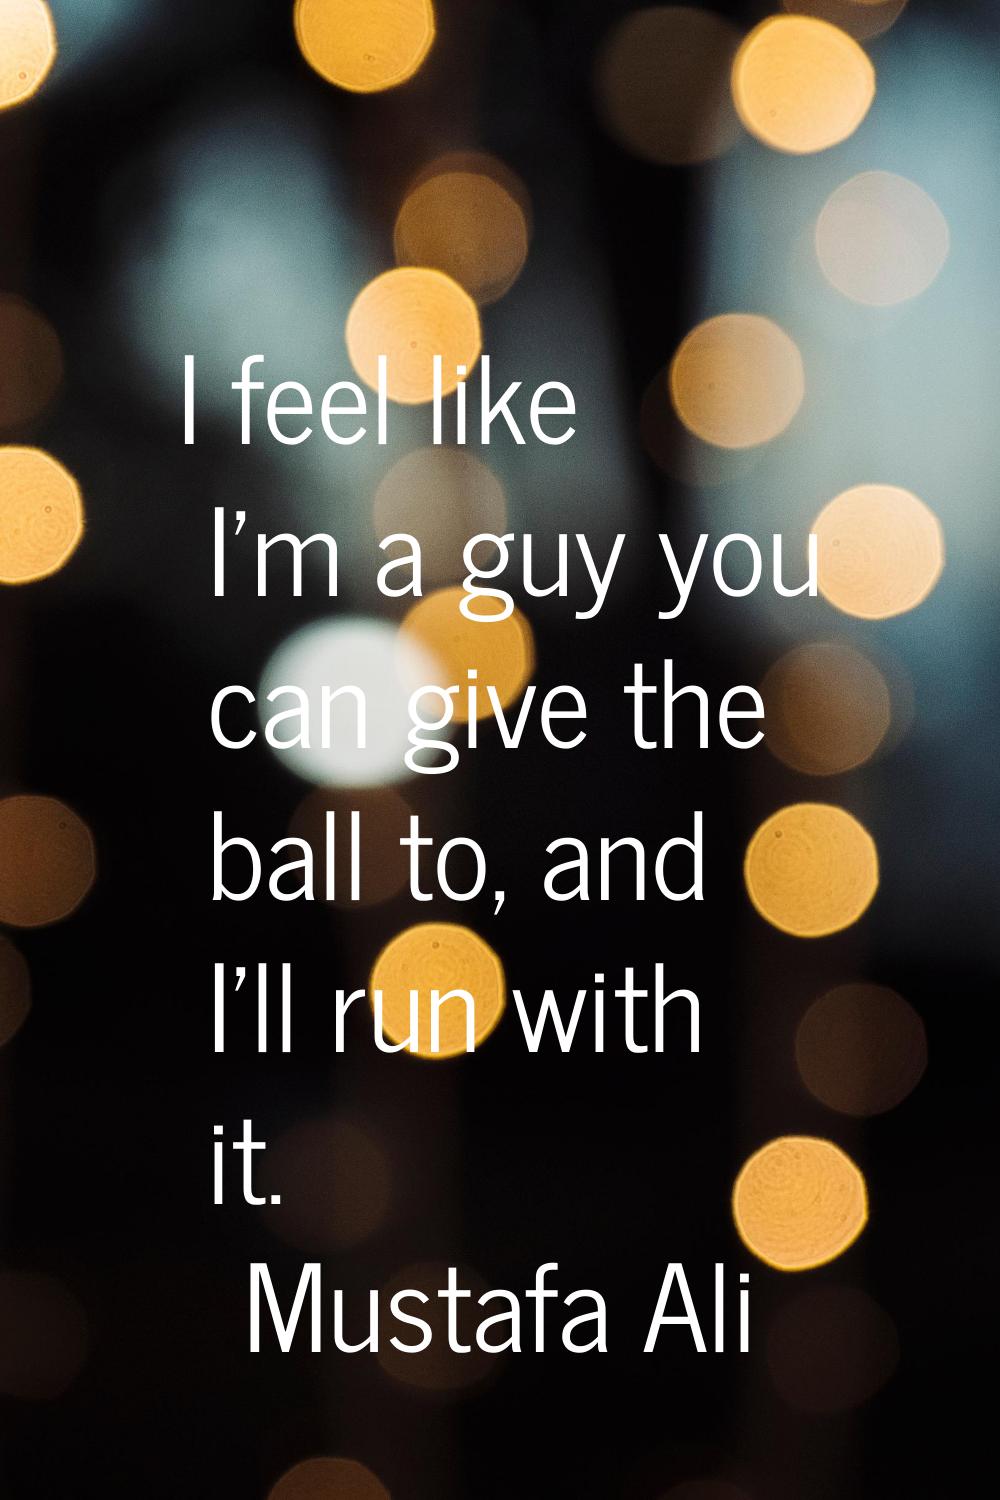 I feel like I'm a guy you can give the ball to, and I'll run with it.